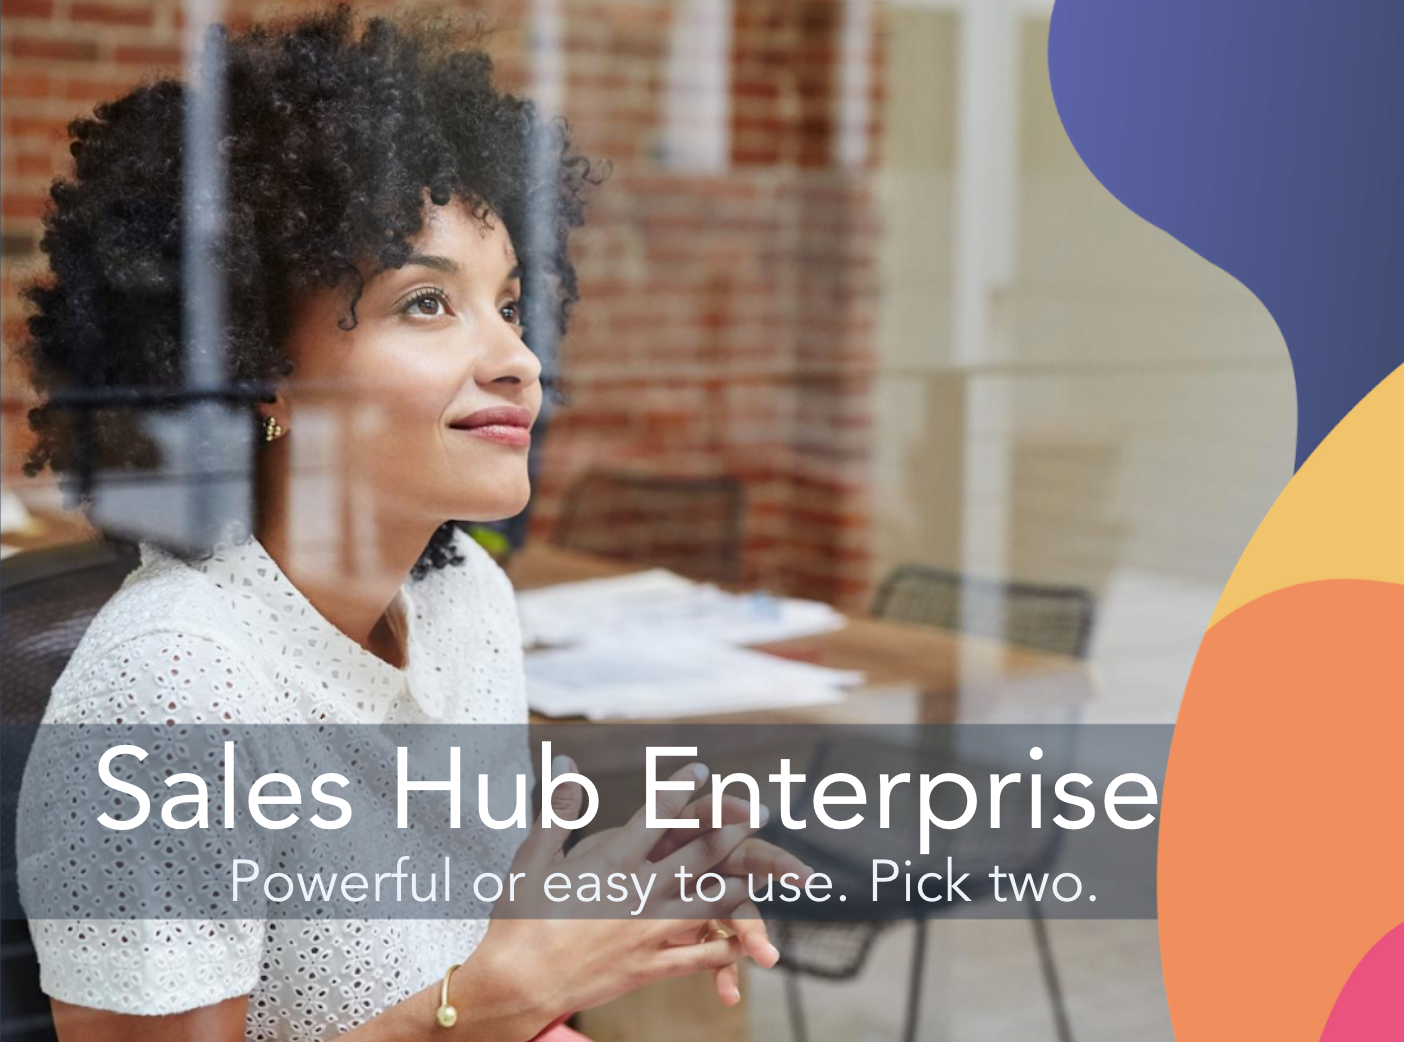 Introducing The New Sales Hub Enterprise